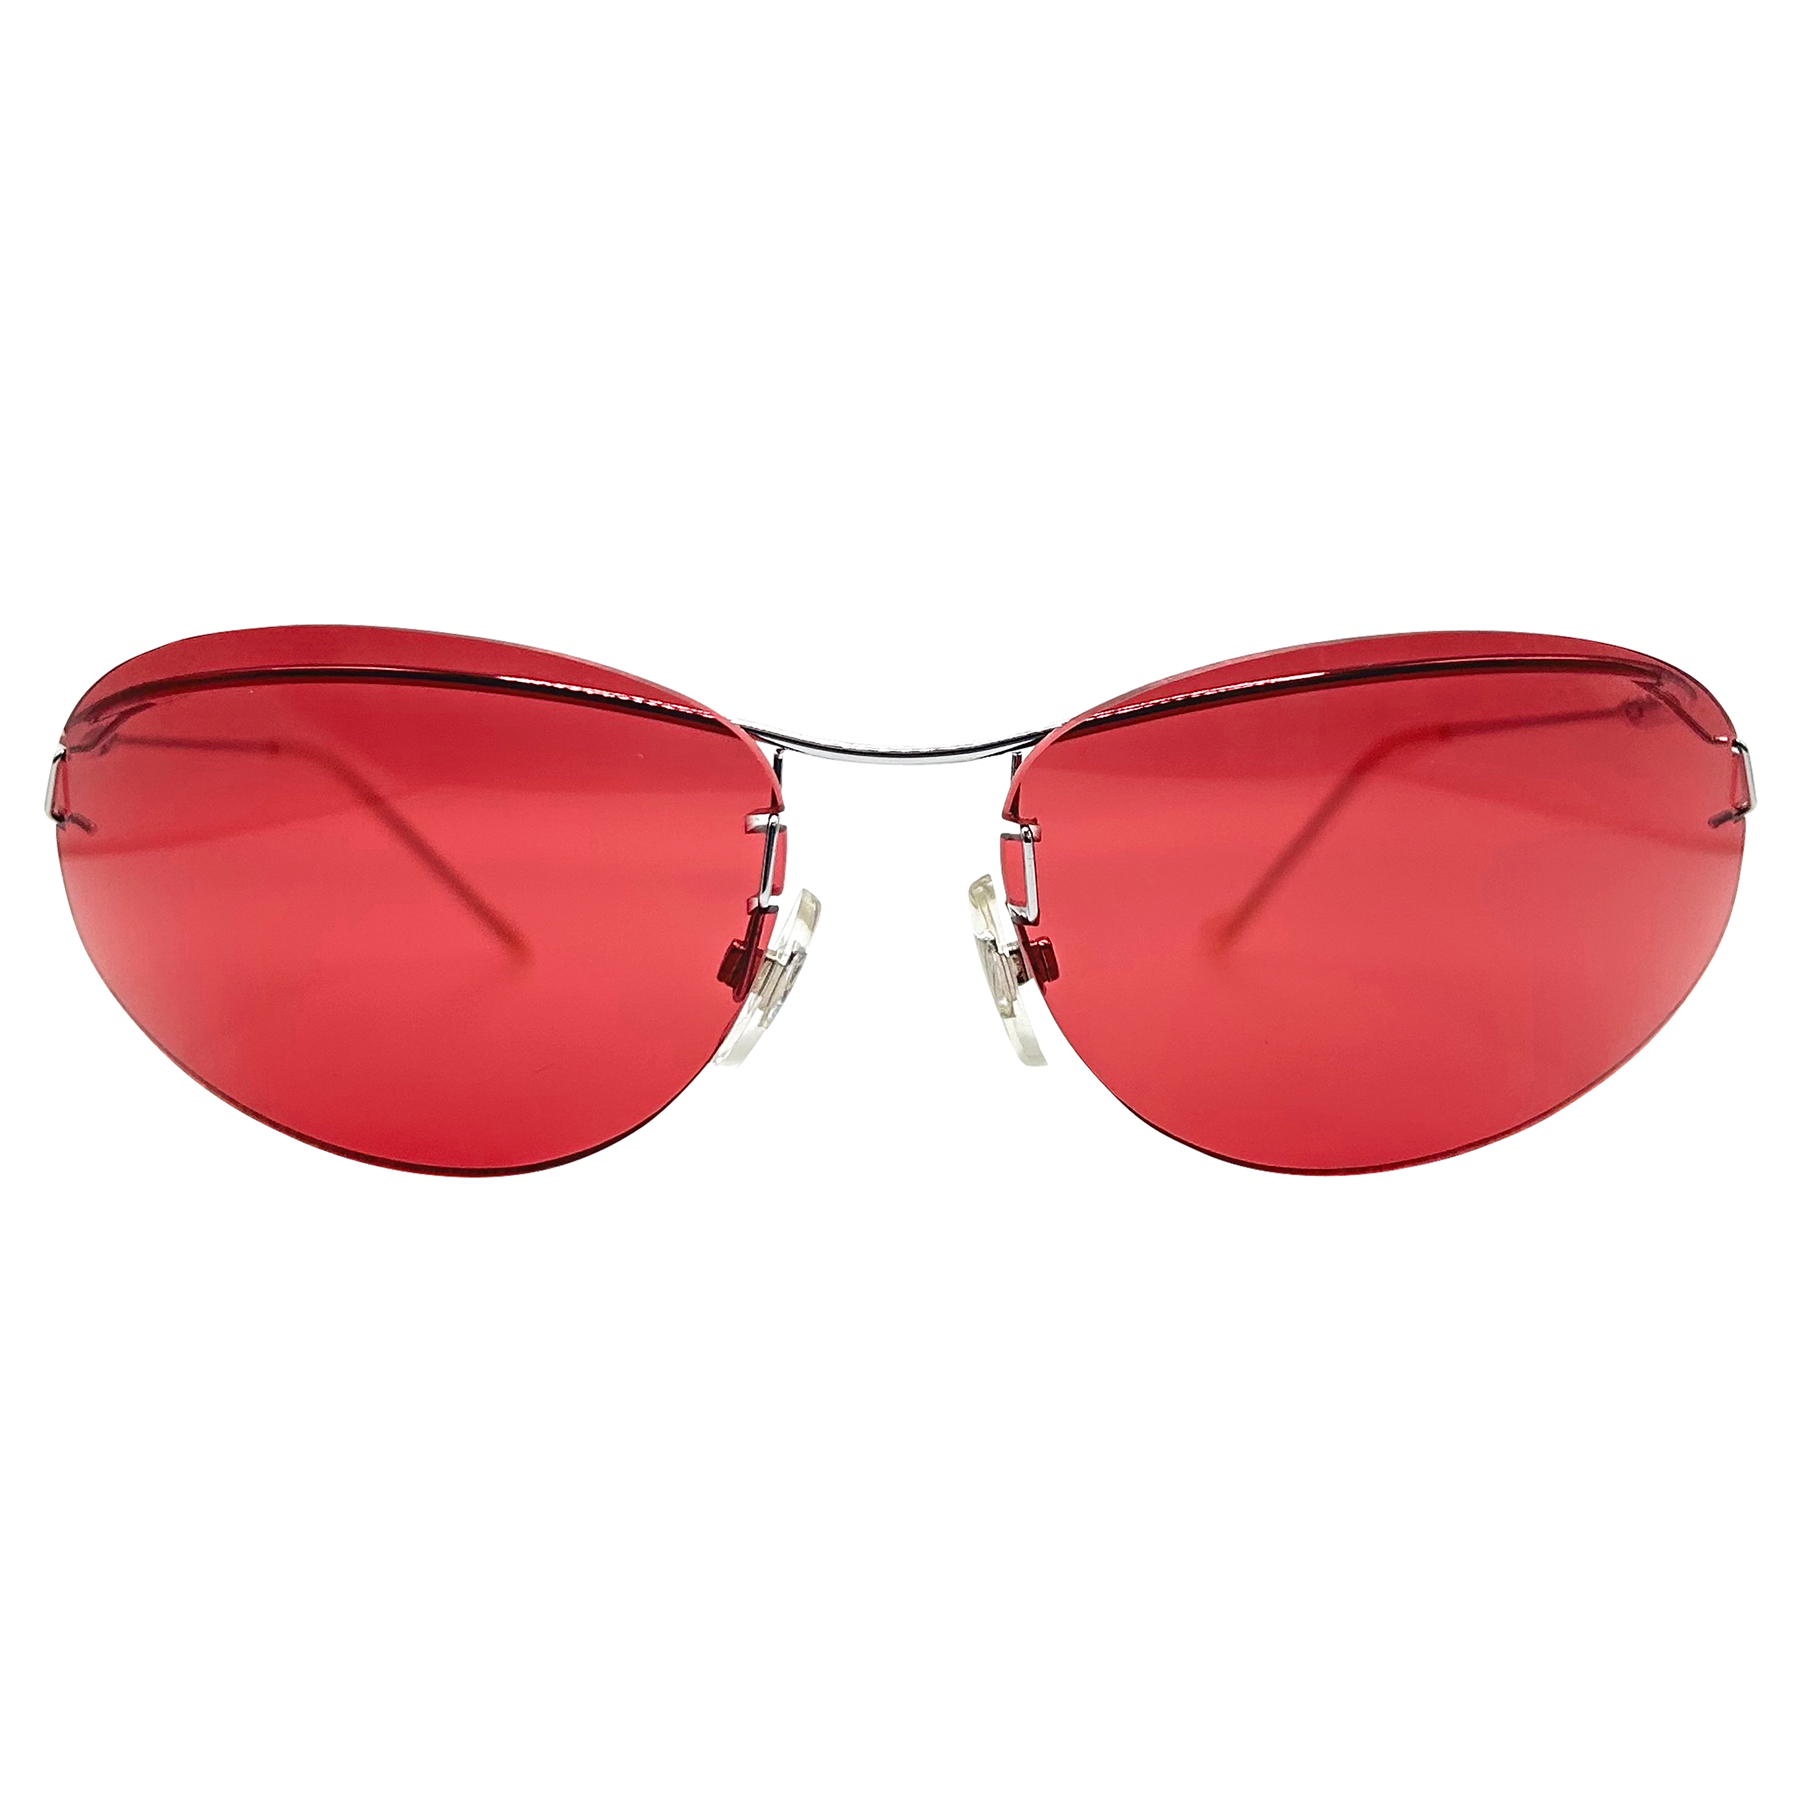 DELEON Pink Rimless Oval Sunglasses